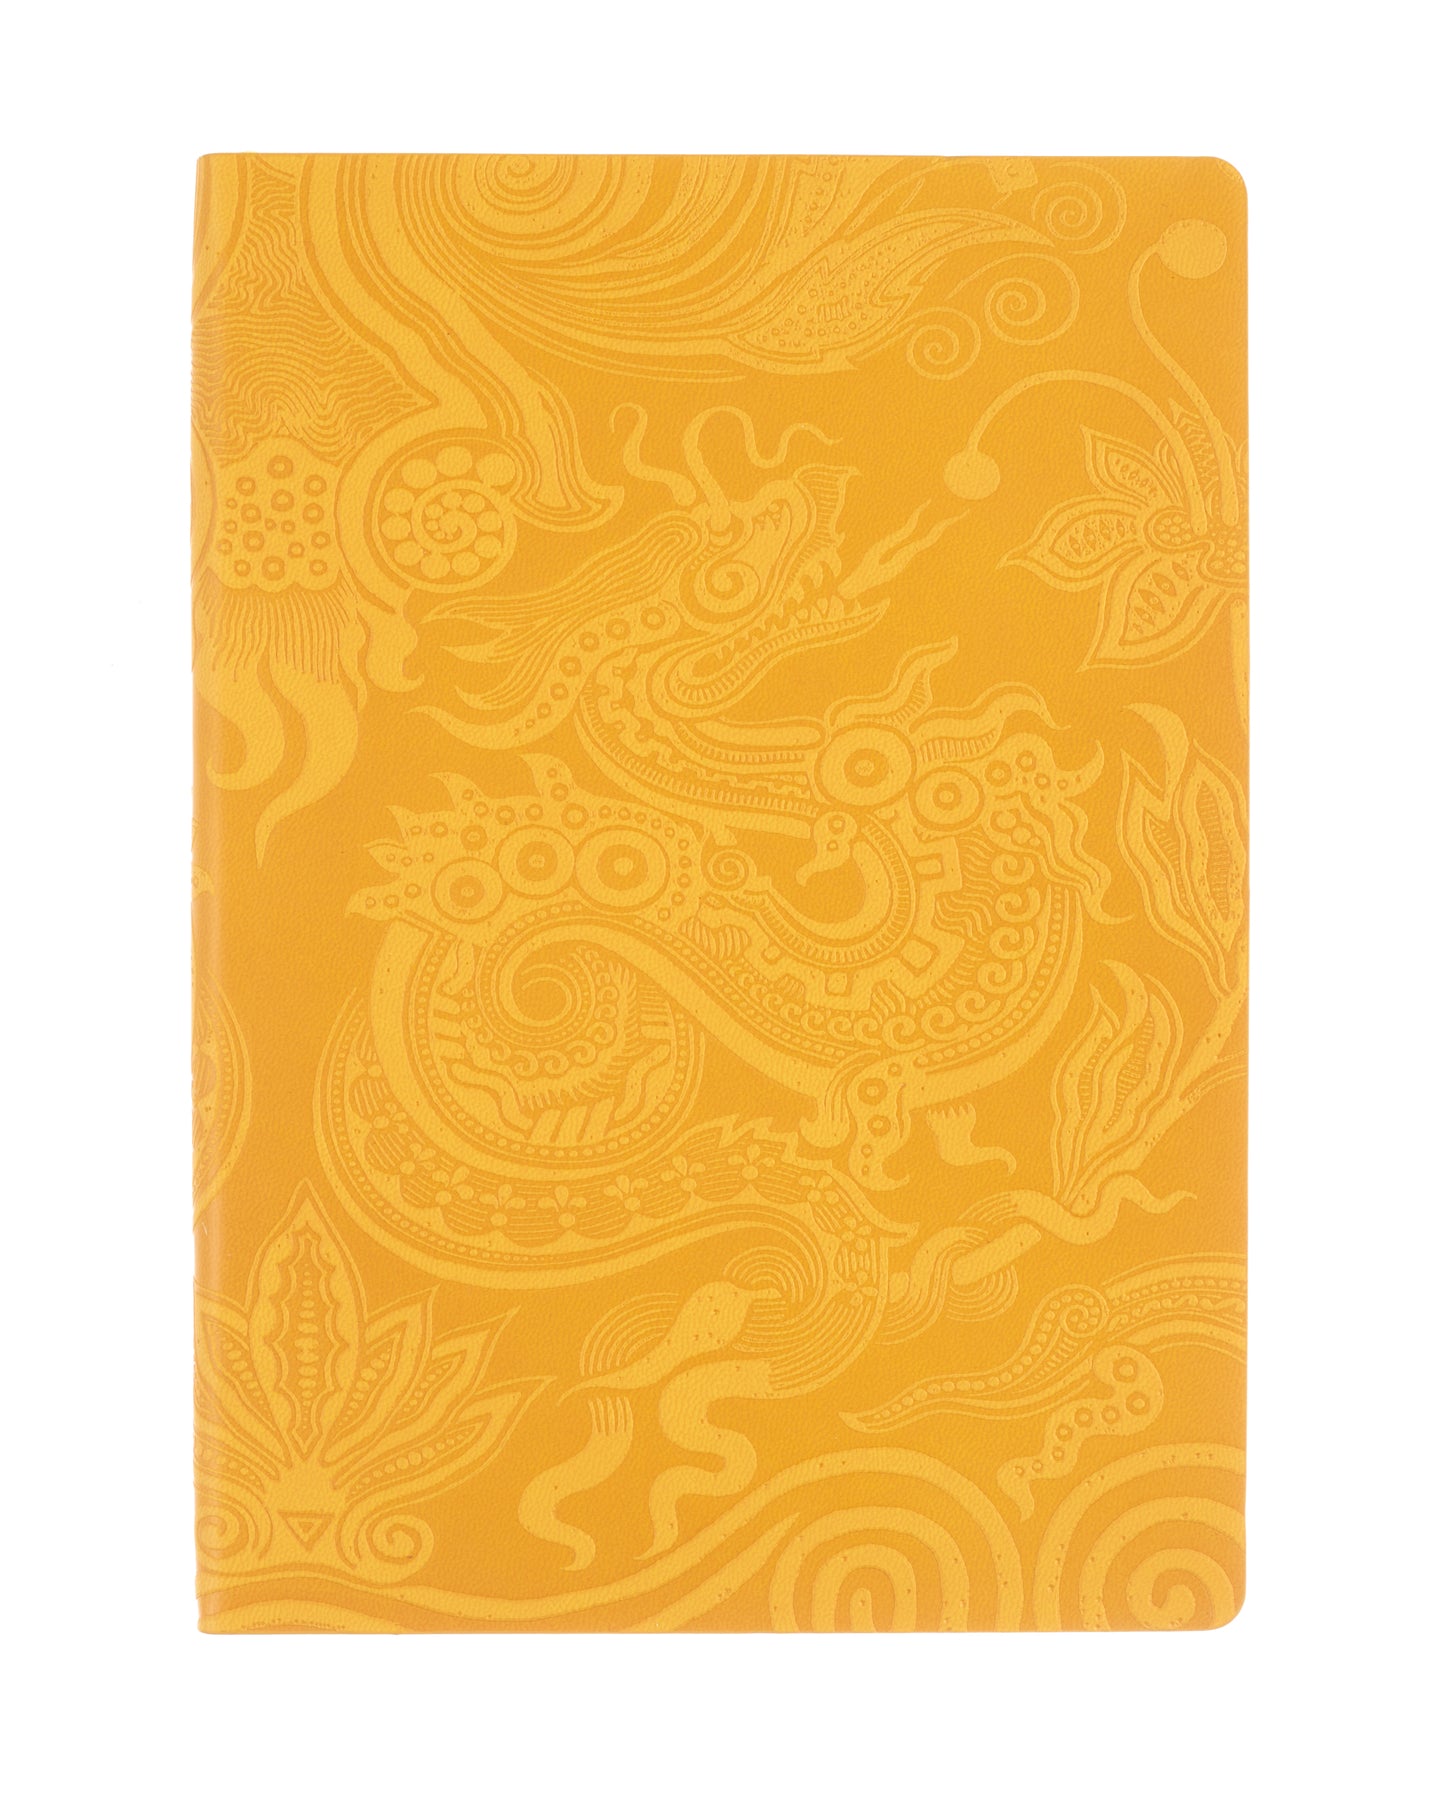 Yellow Dragon Notebook